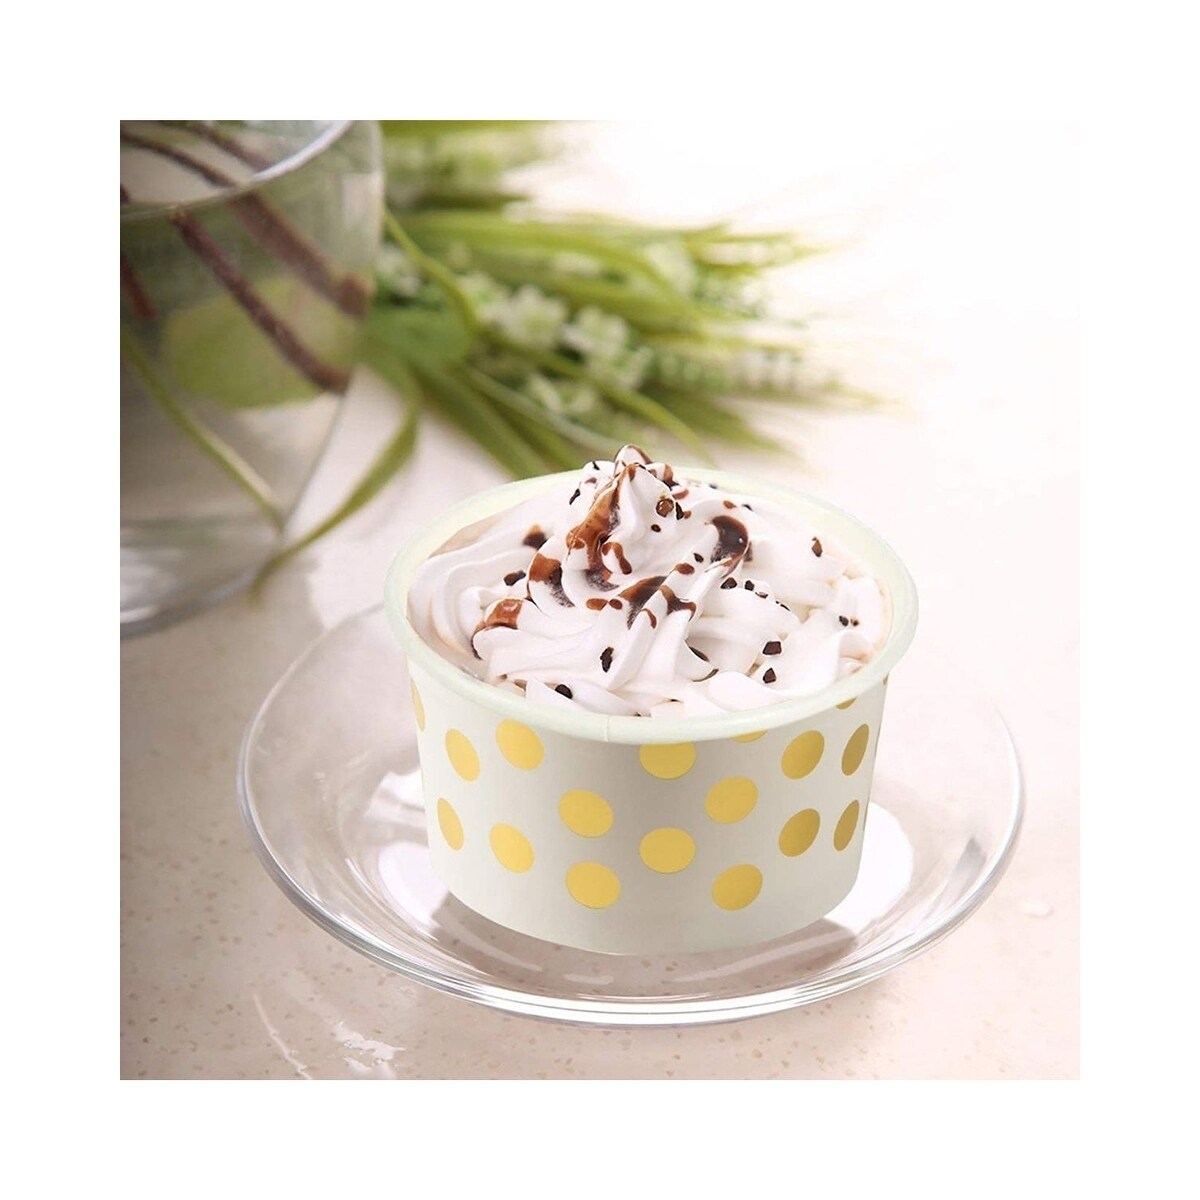 50-Count Paper Ice Cream Cups Yogurt Dessert Gold Polka Dot Party Bowls 8-Oz - White